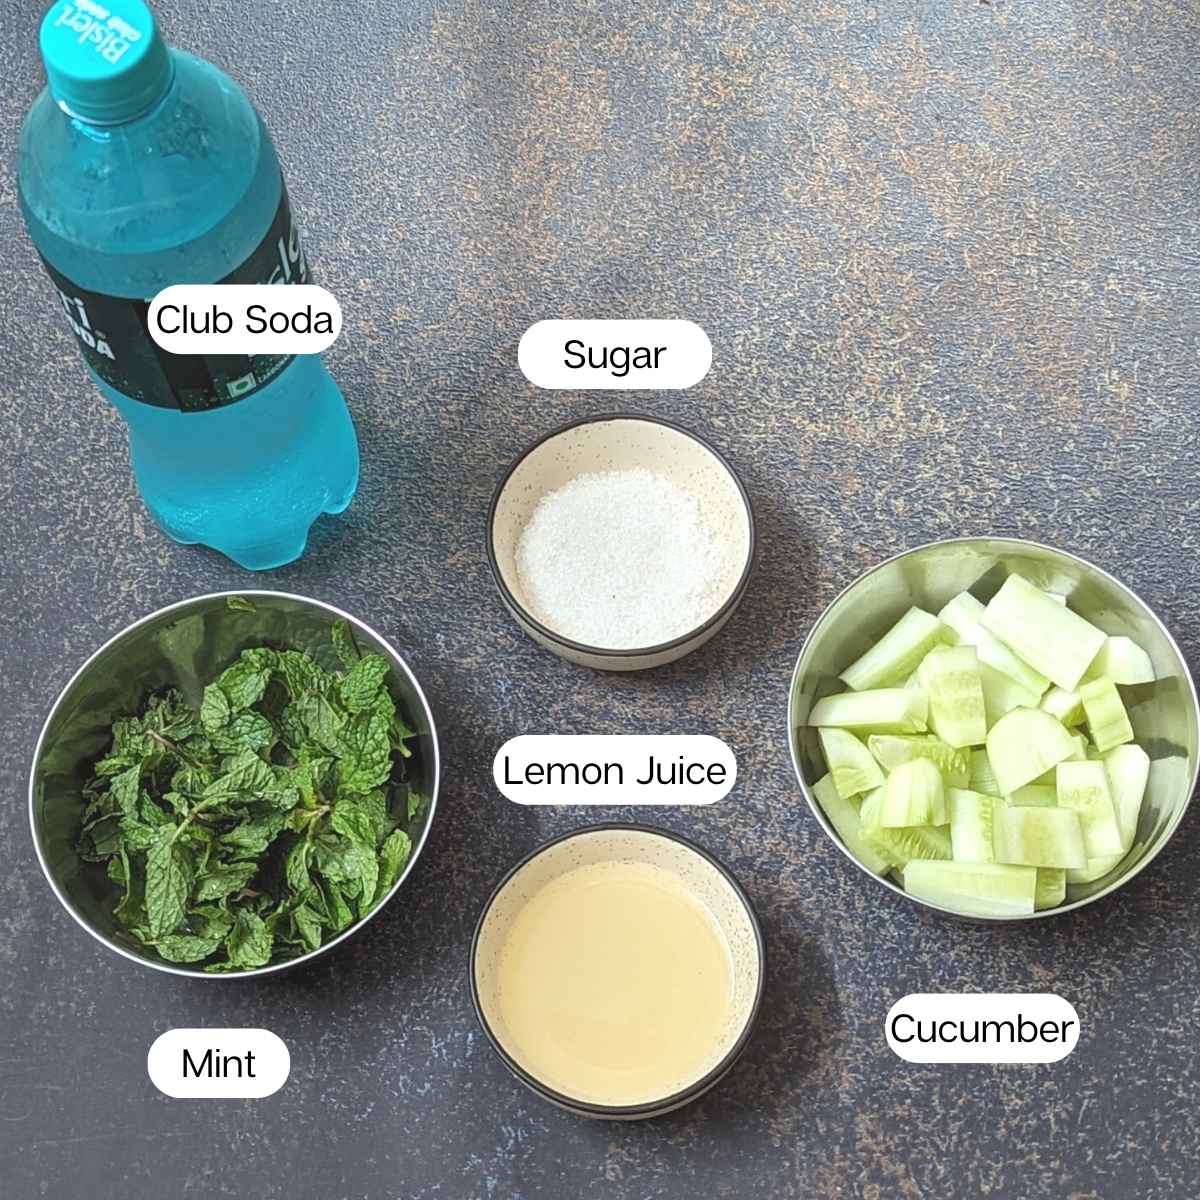 Ingredients for making cucumber mint lemonade: club soda, mint, cucumber cubes, lemon juice, sigar.